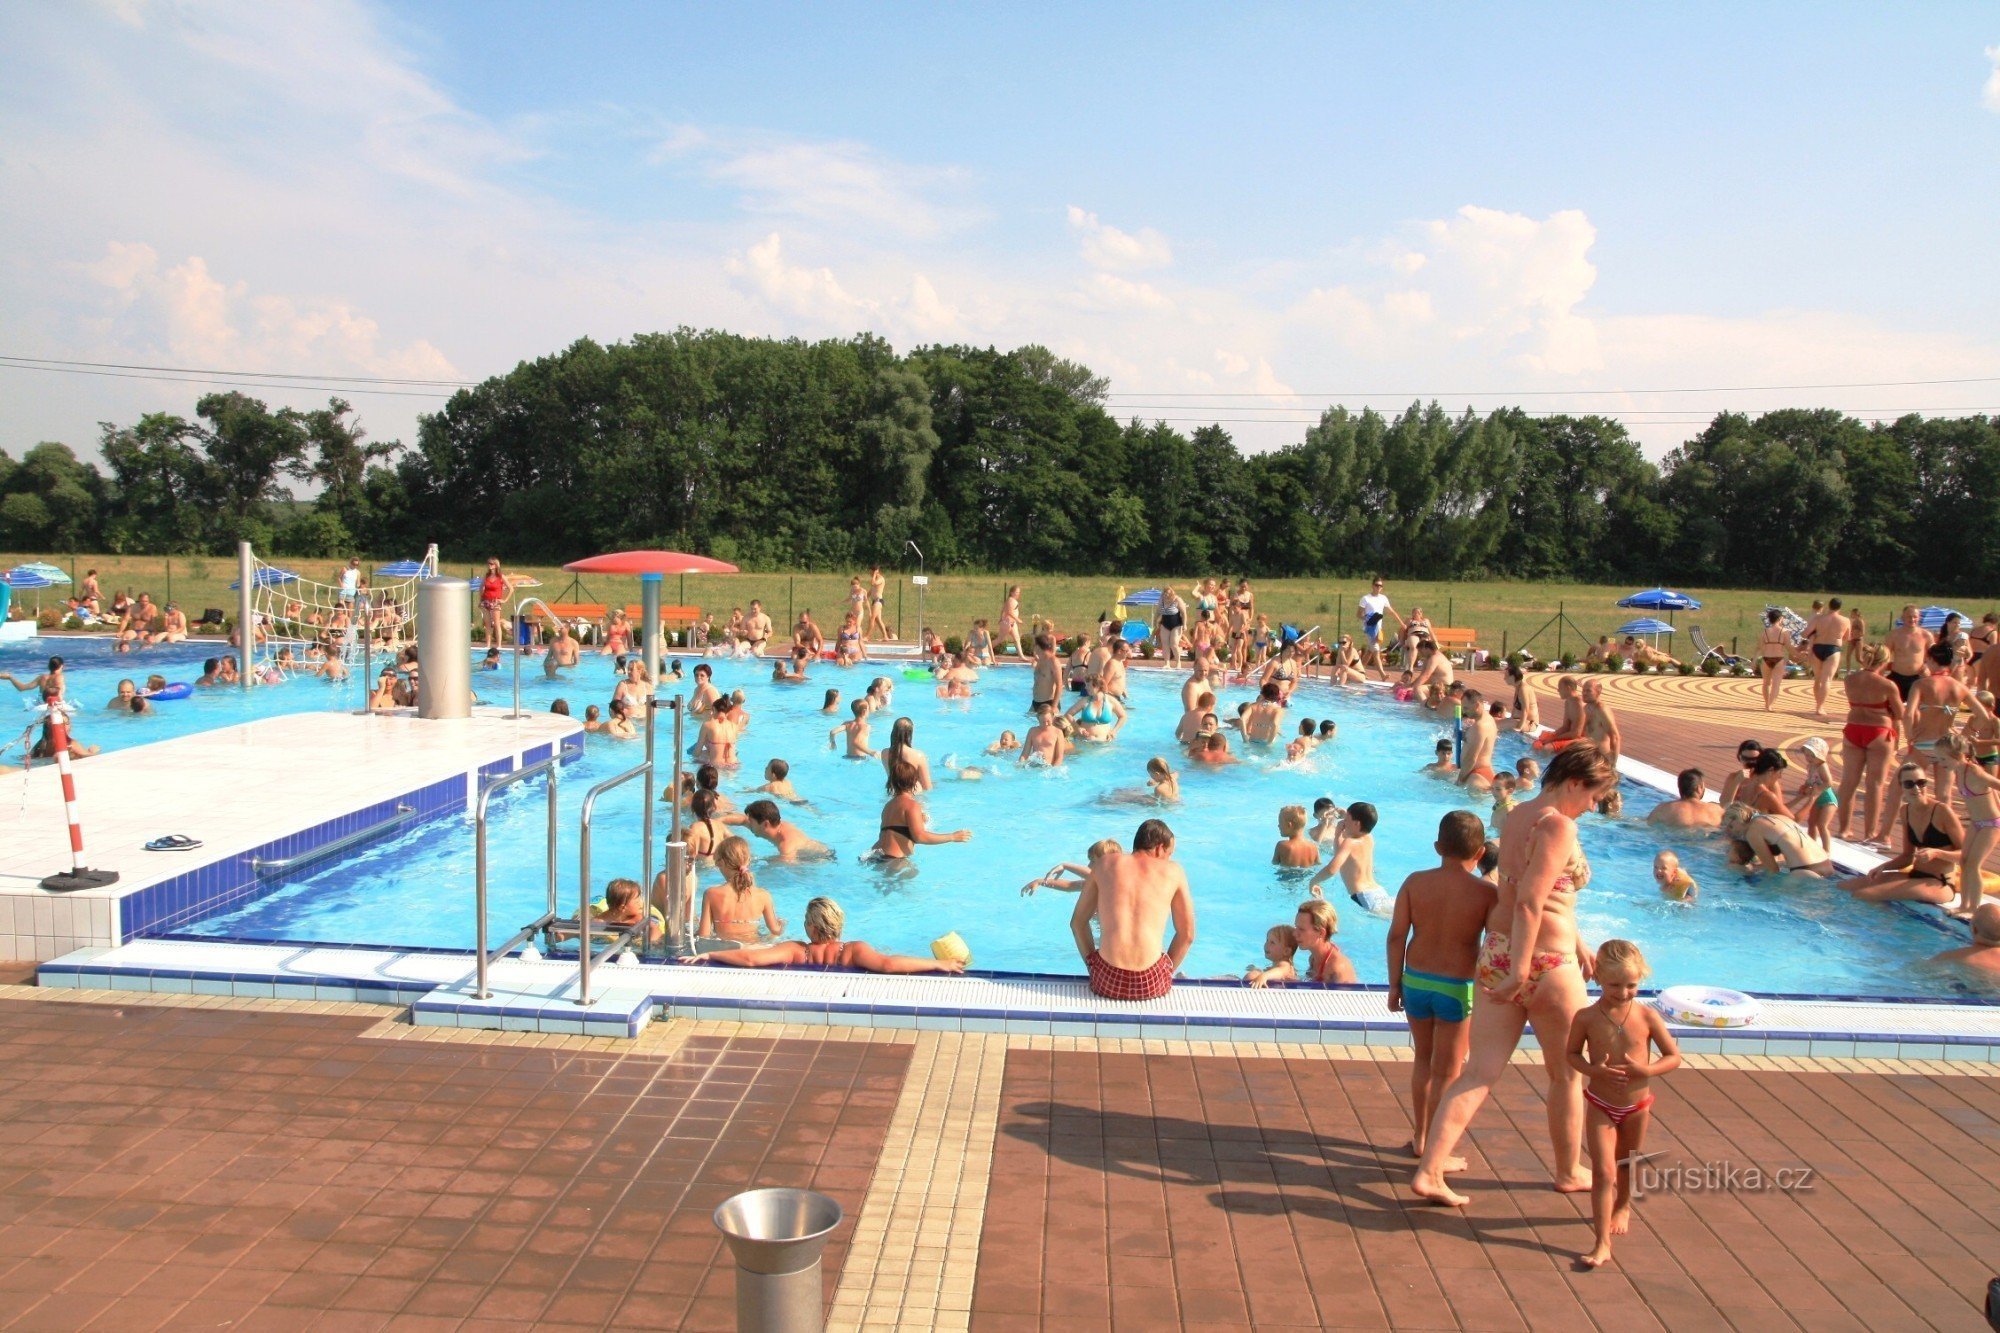 Zabčice - water park